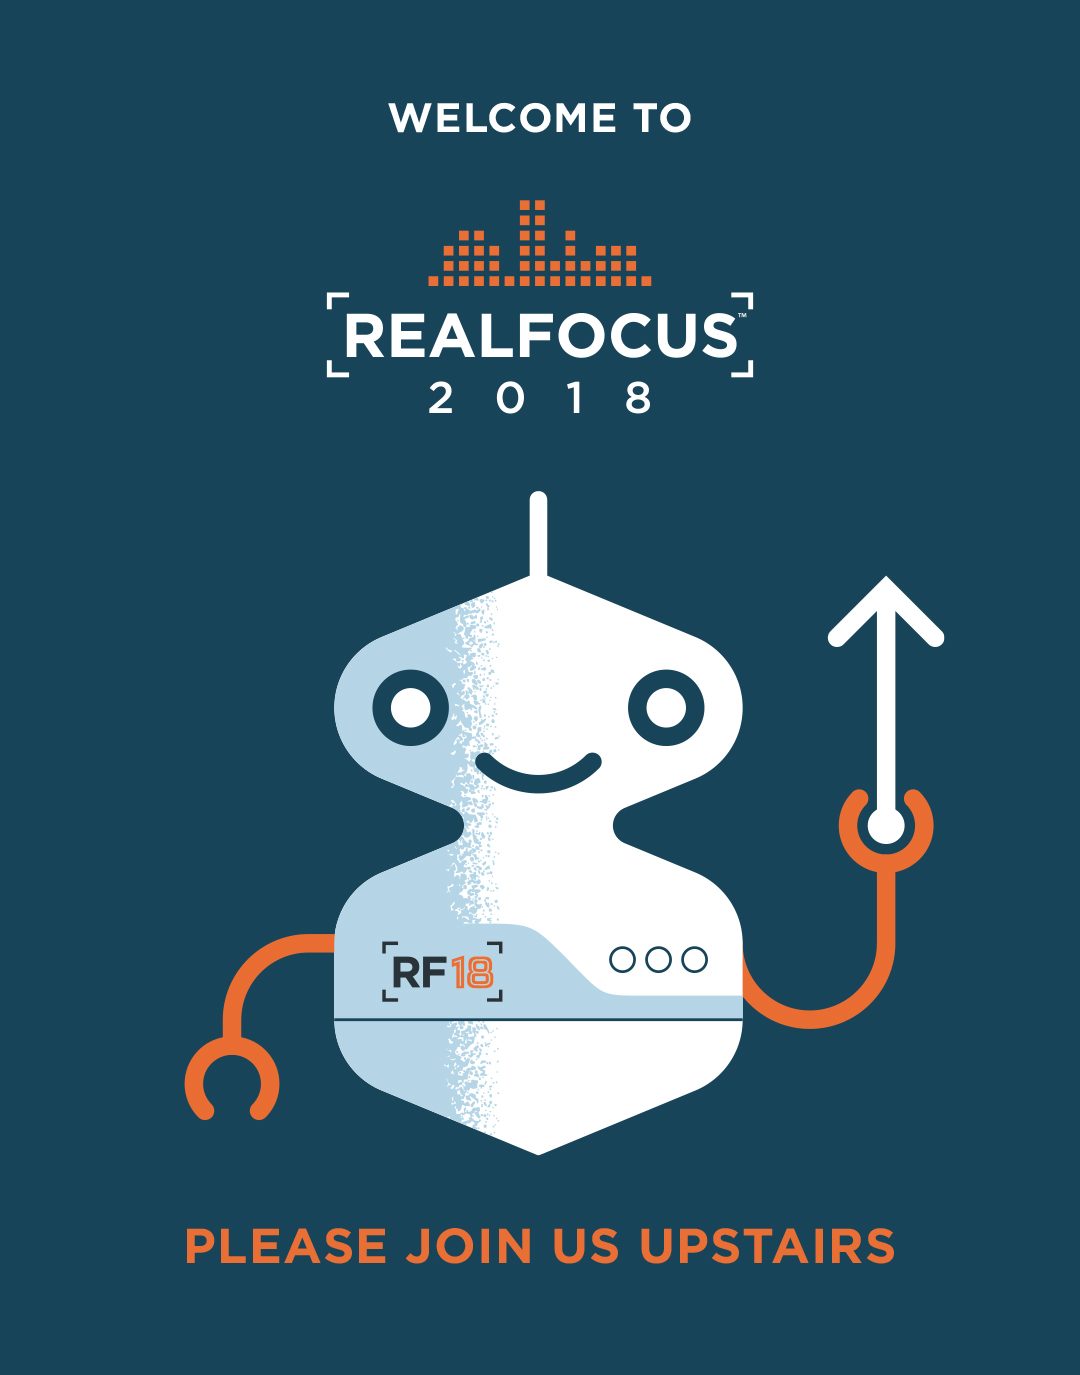 Real Focus 2018 Main Directory Signage